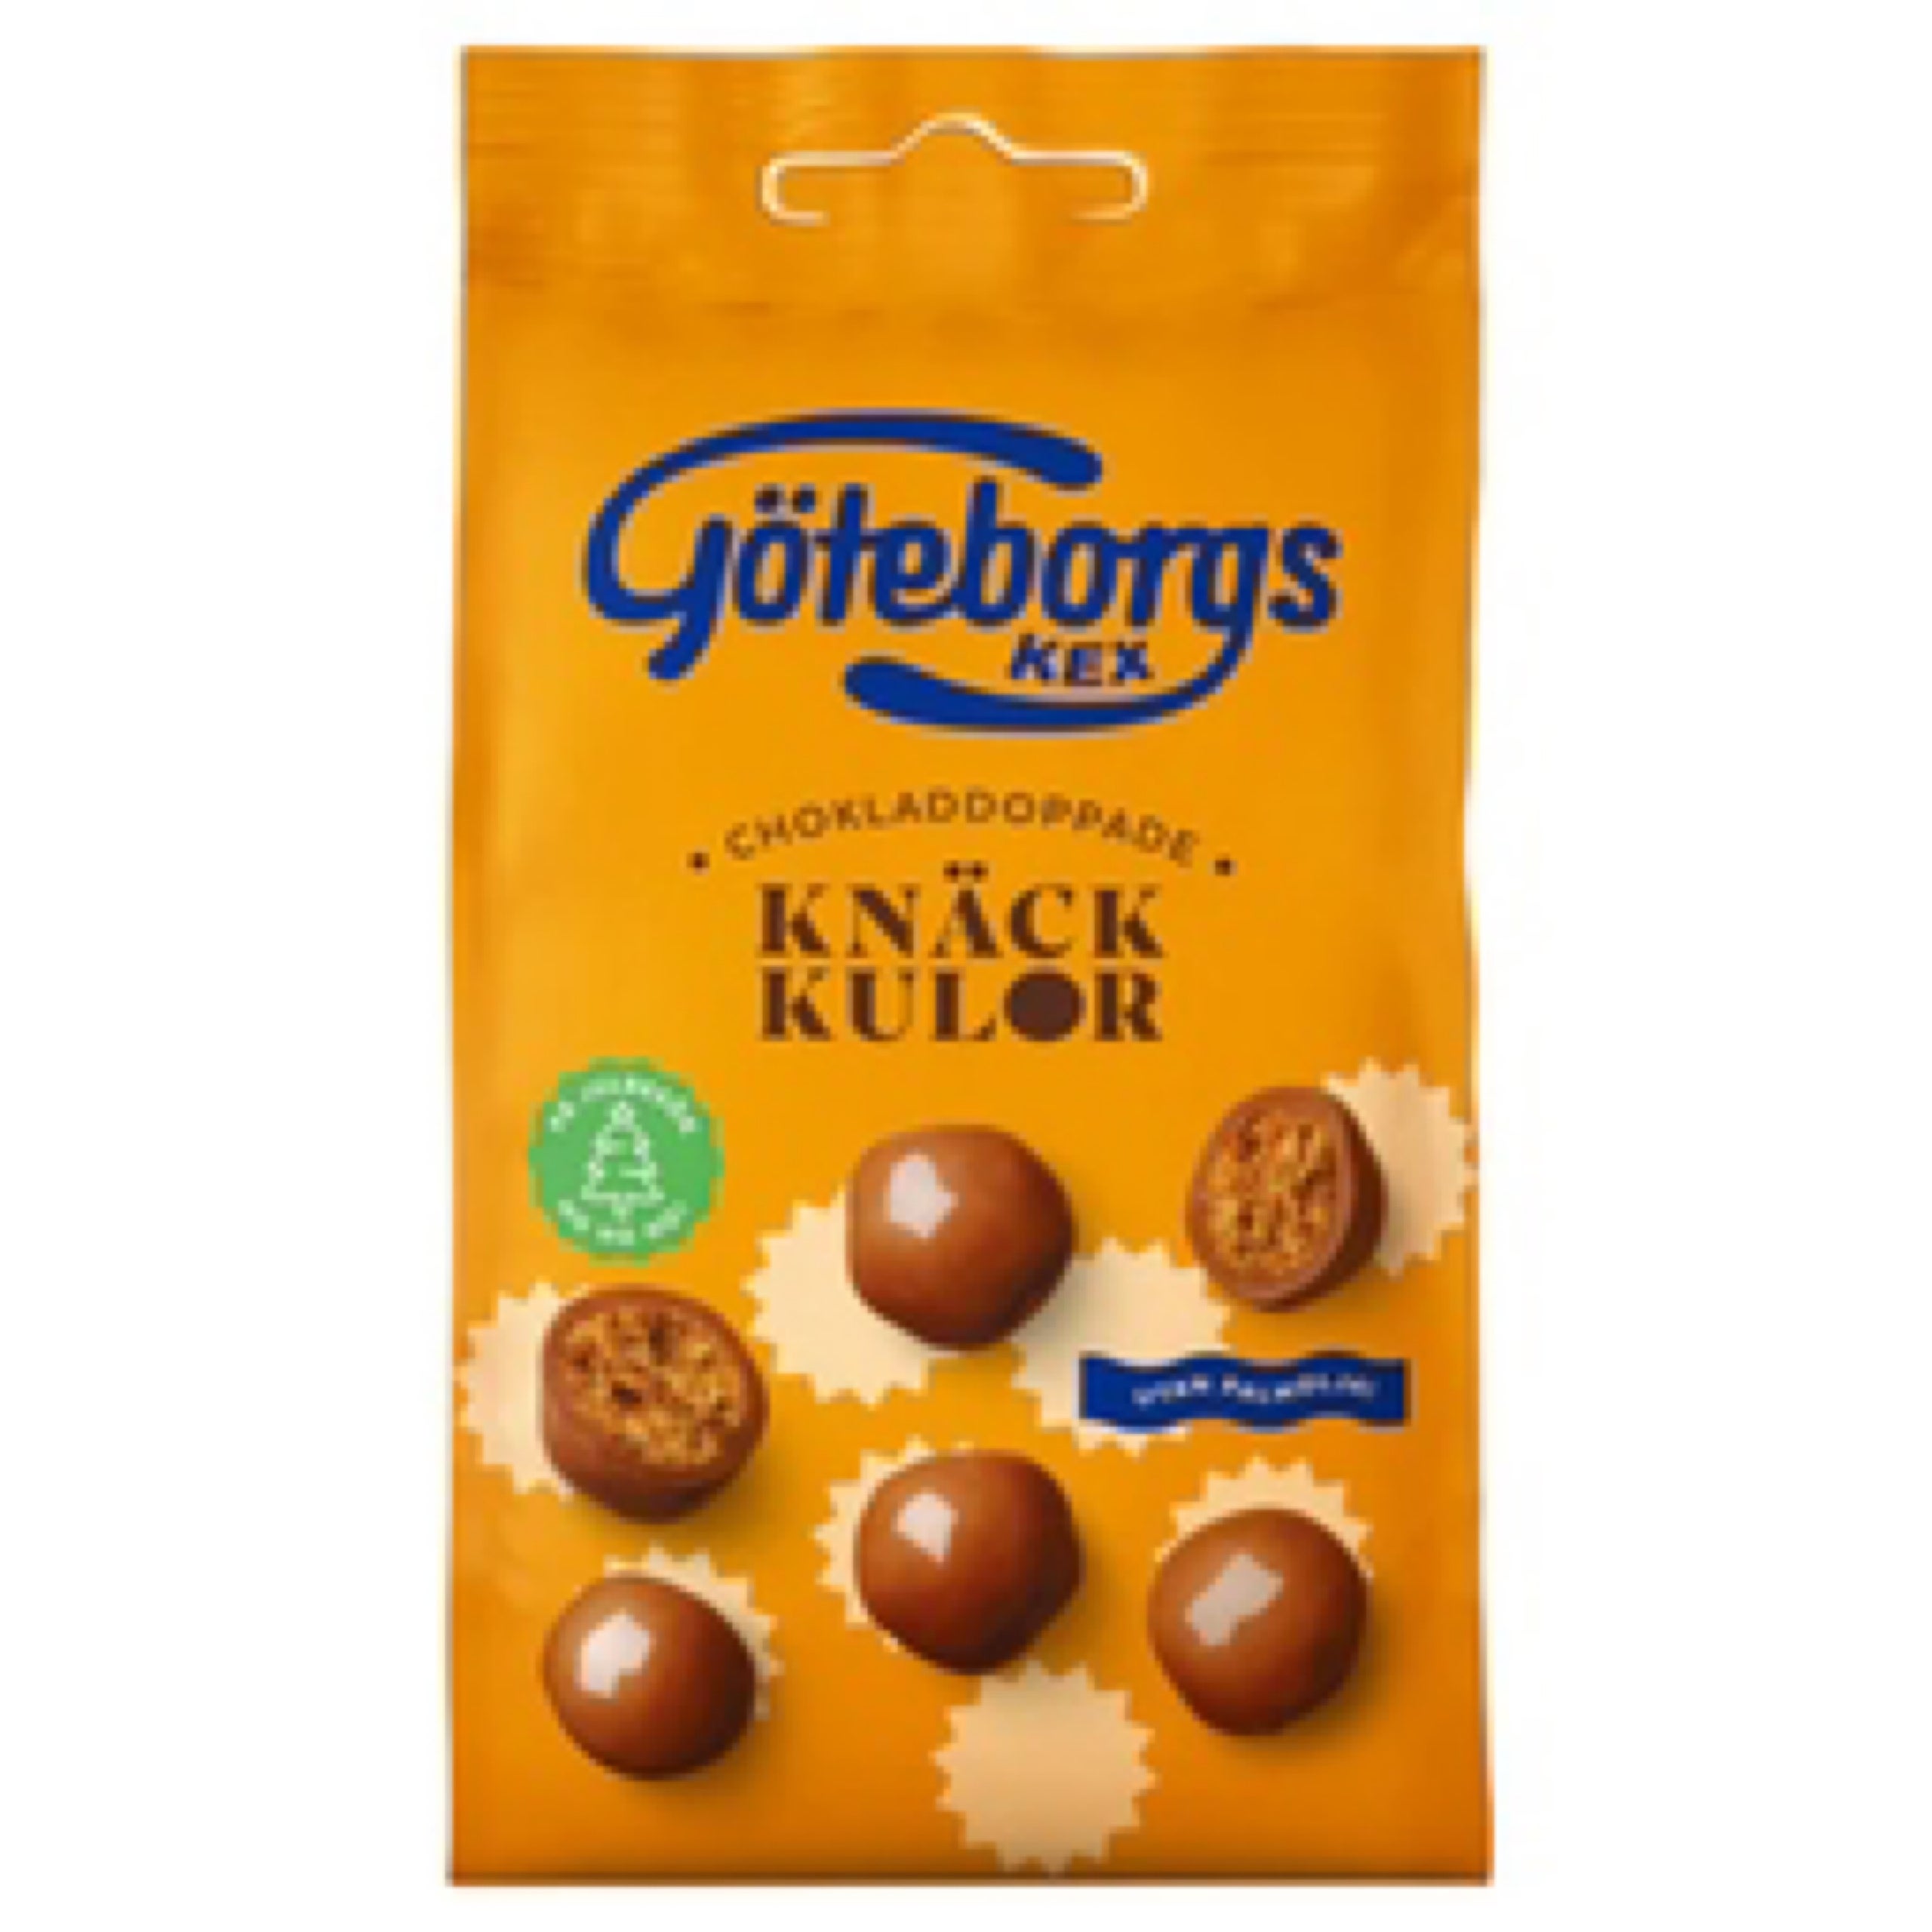 Goteborgs Kex Knackkulor chocolate crisps | Nordiska